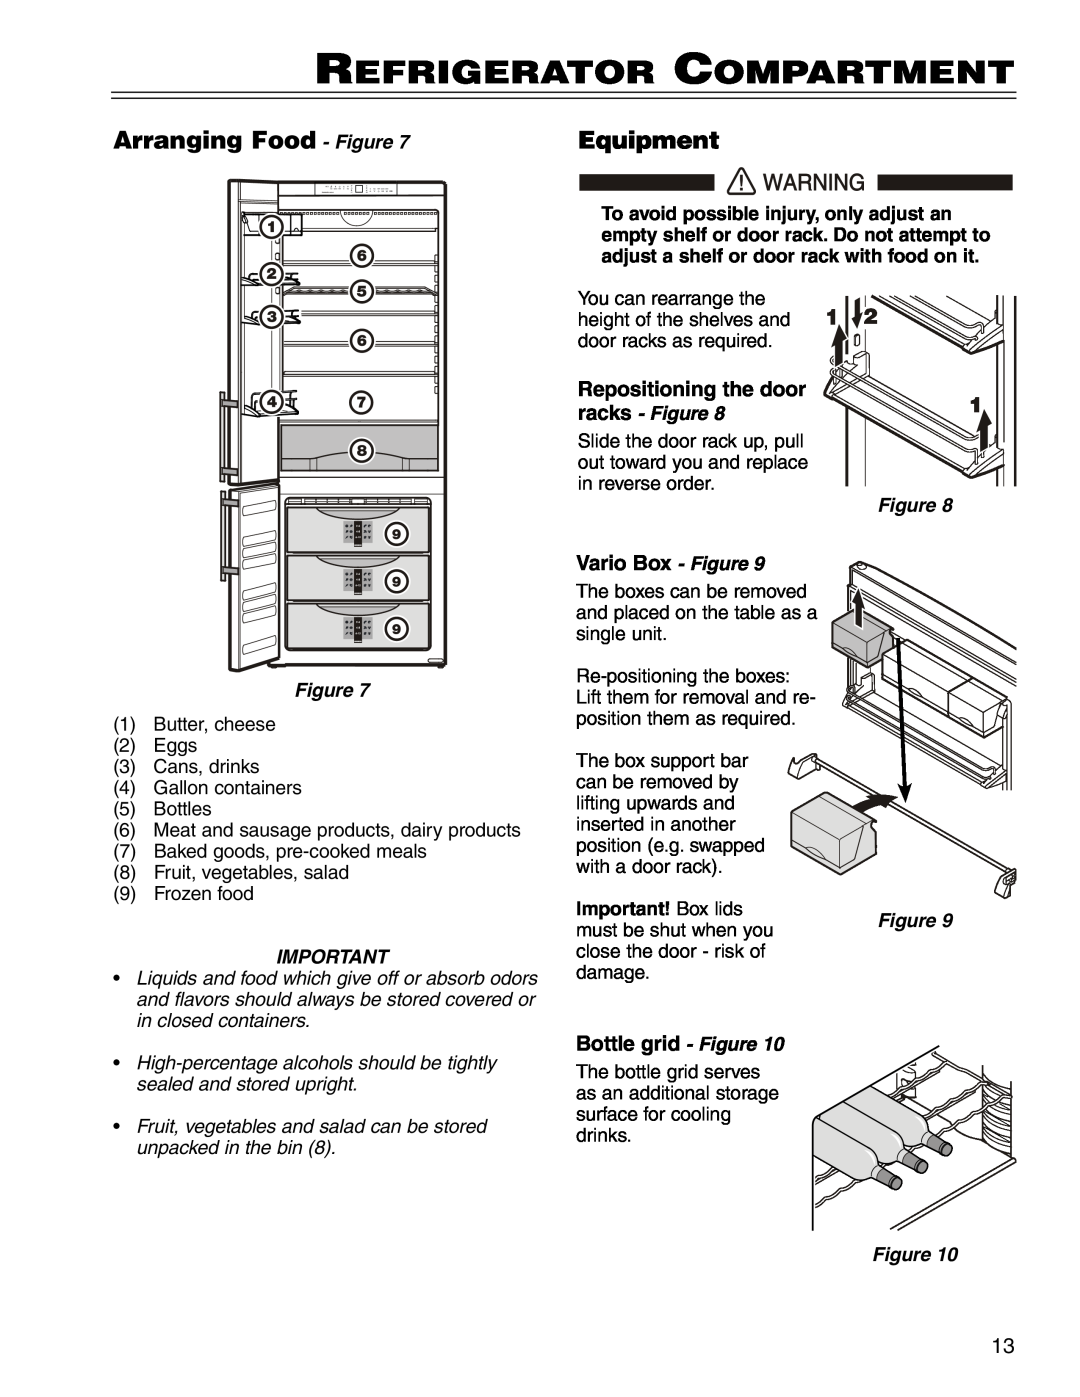 Liebherr CS 1611 7801 149-00 manual Refrigerator Compartment, Arranging Food - Figure, Equipment, Vario Box - Figure 